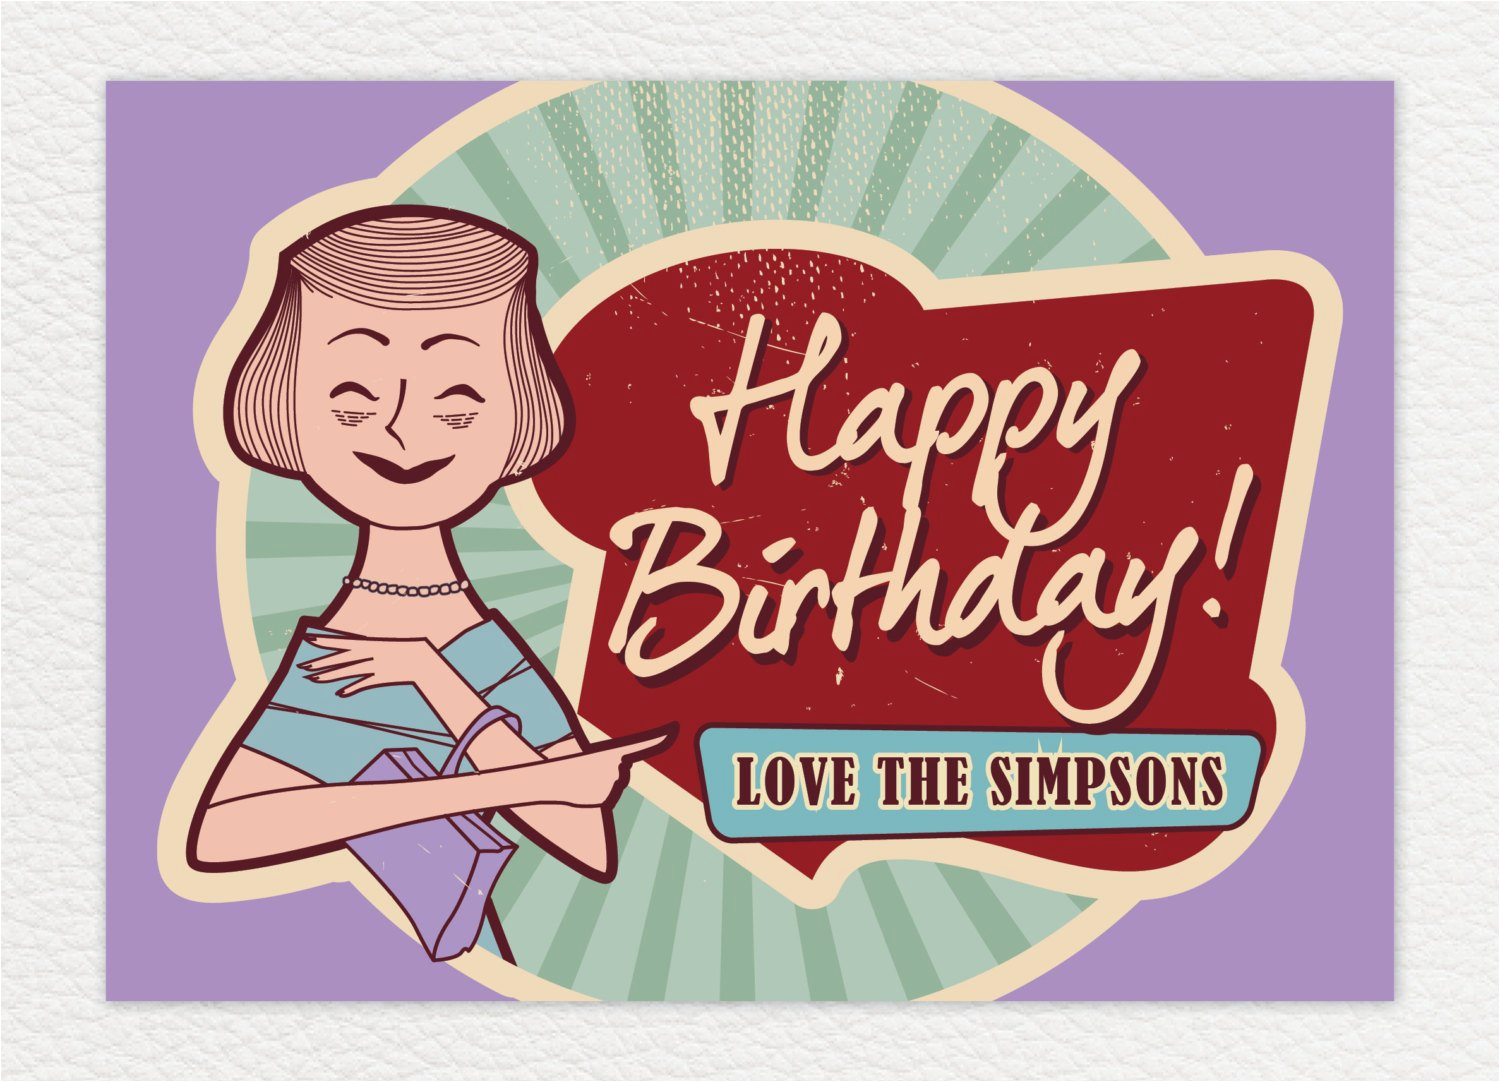 classic 1950s birthday card say happy birthday in retro style